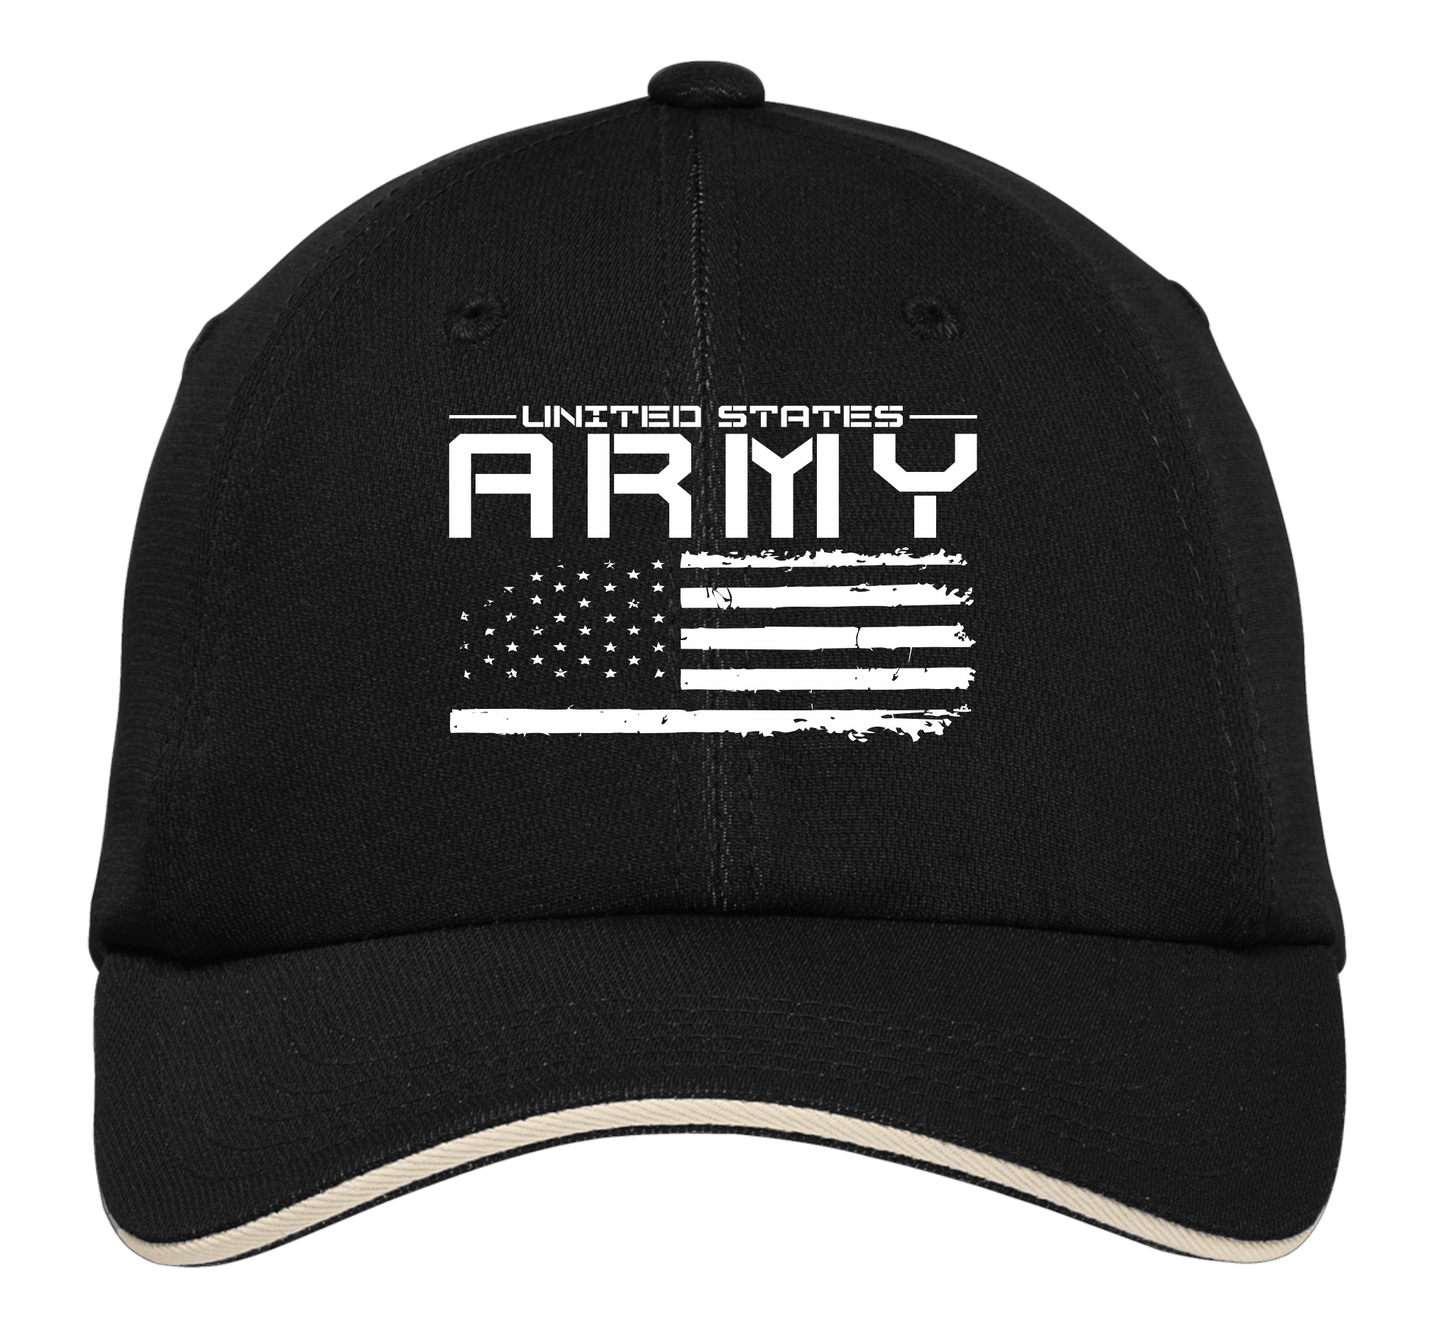 United States Army Flag Design on Black/White Cap